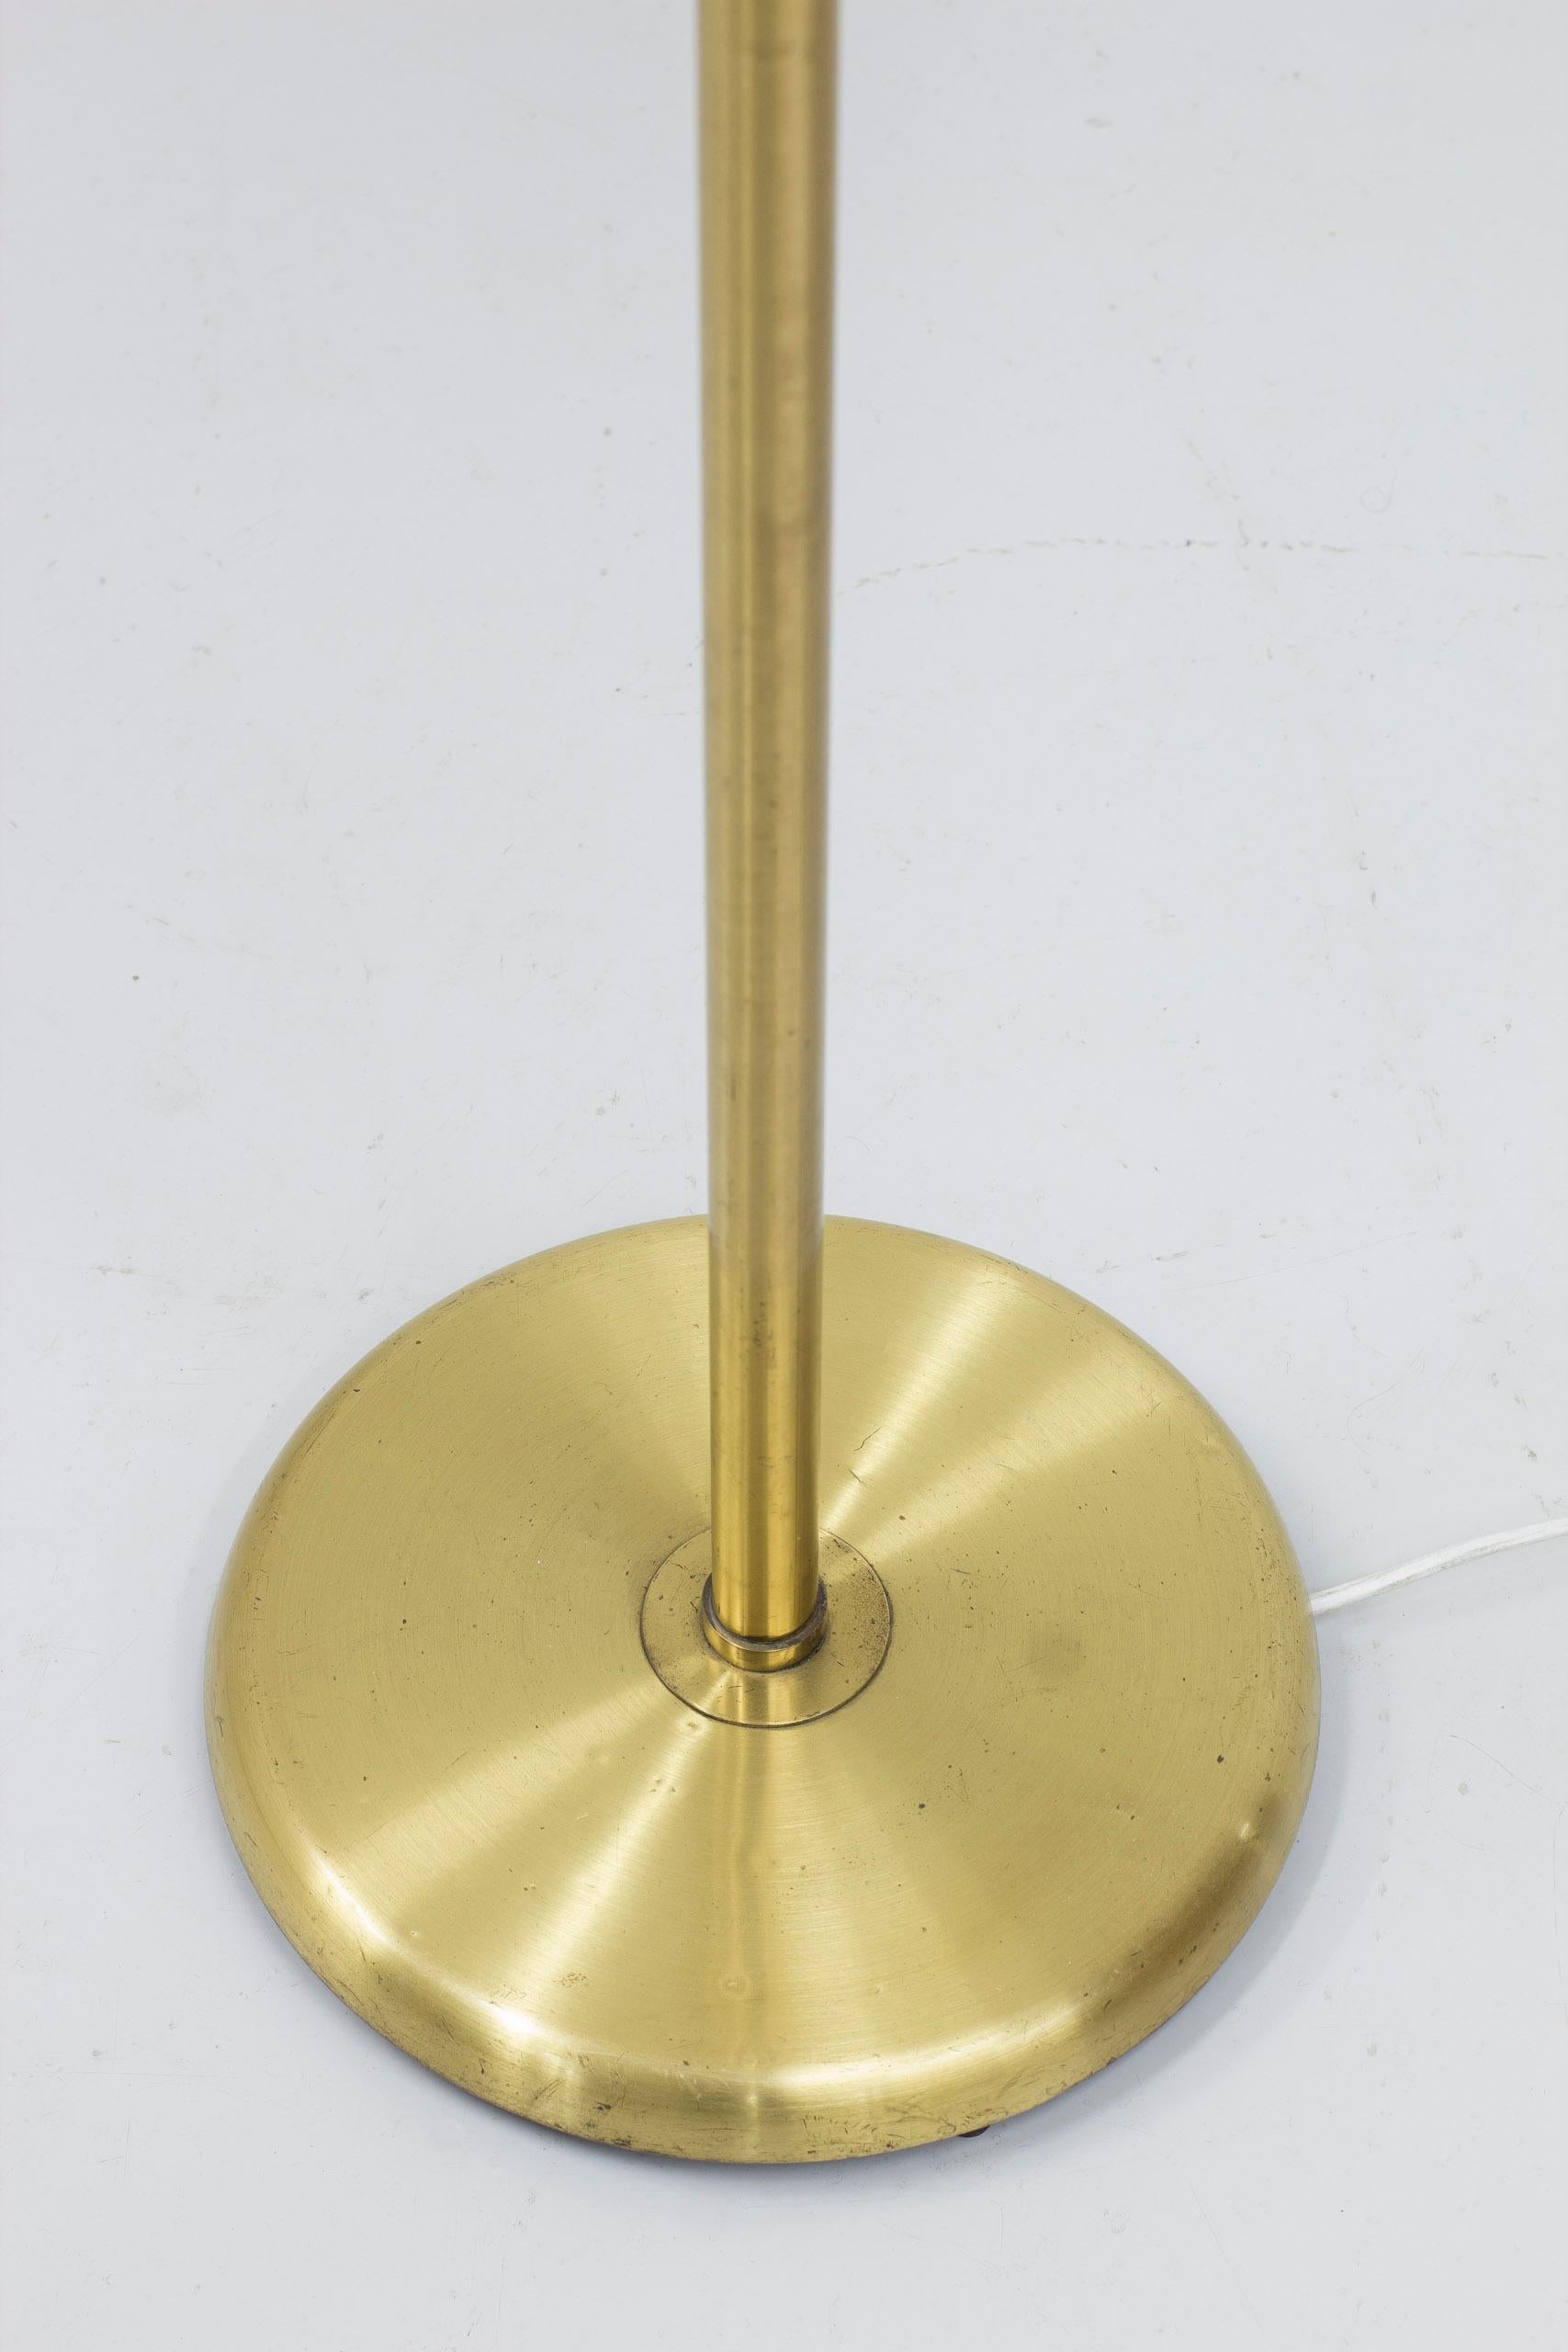 Swedish Modern floor lamp in brass in the manner of Josef Frank, Sweden, 1940s For Sale 5